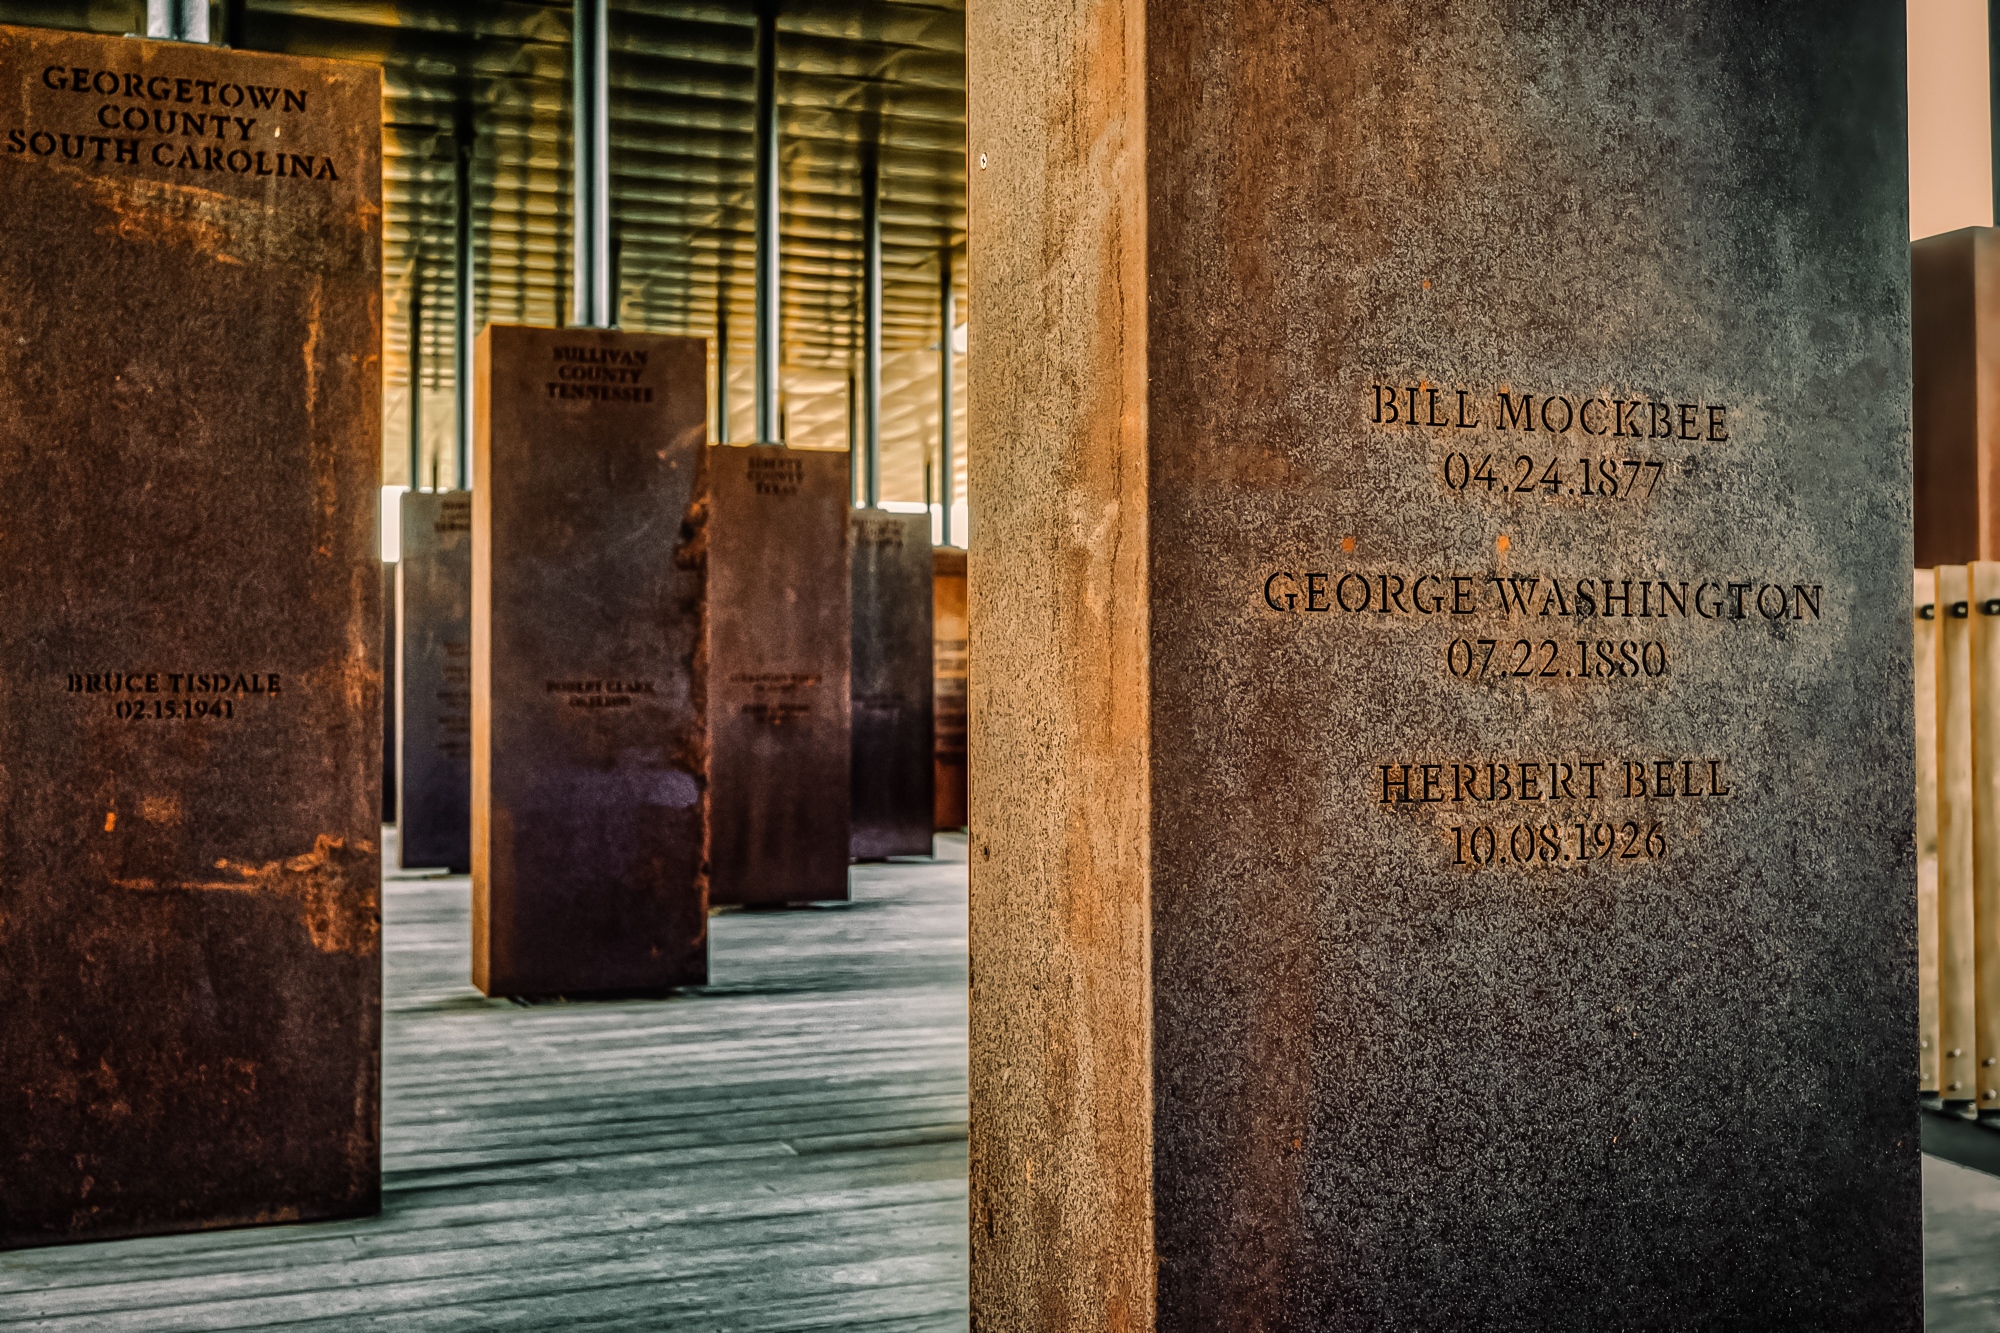 National Memorial-Peace and Justice - Bill Mockbee George Washington Herbert Bell